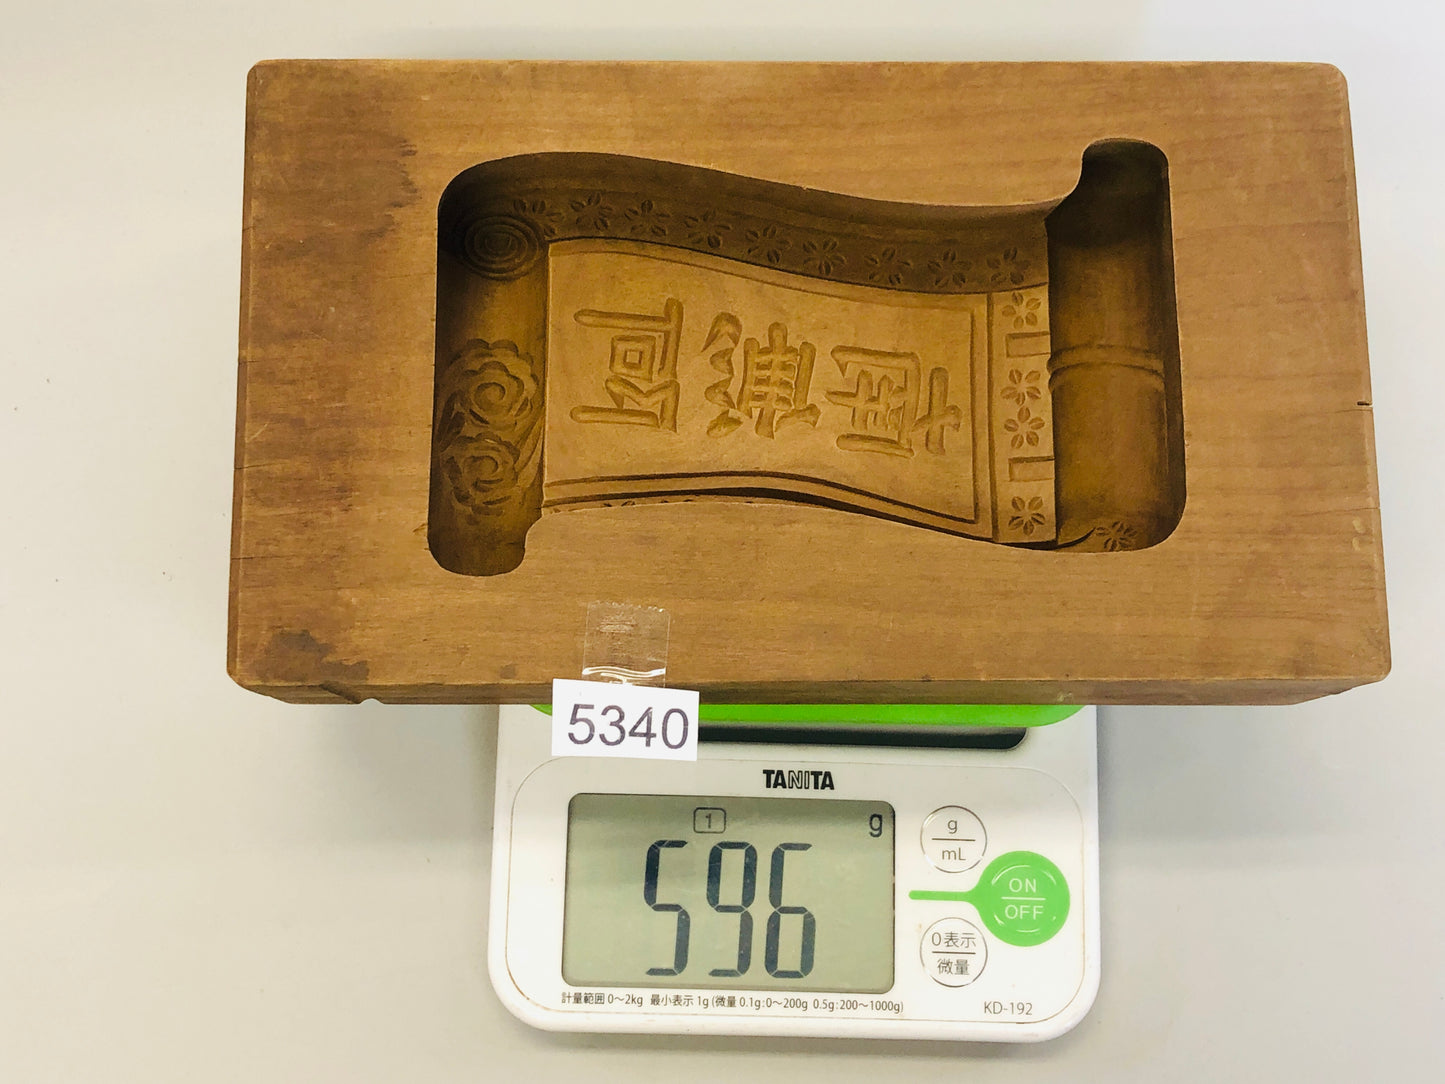 Y5340 KASHIGATA Kanji wood carving Japan antique Wooden Pastry Mold wagashi